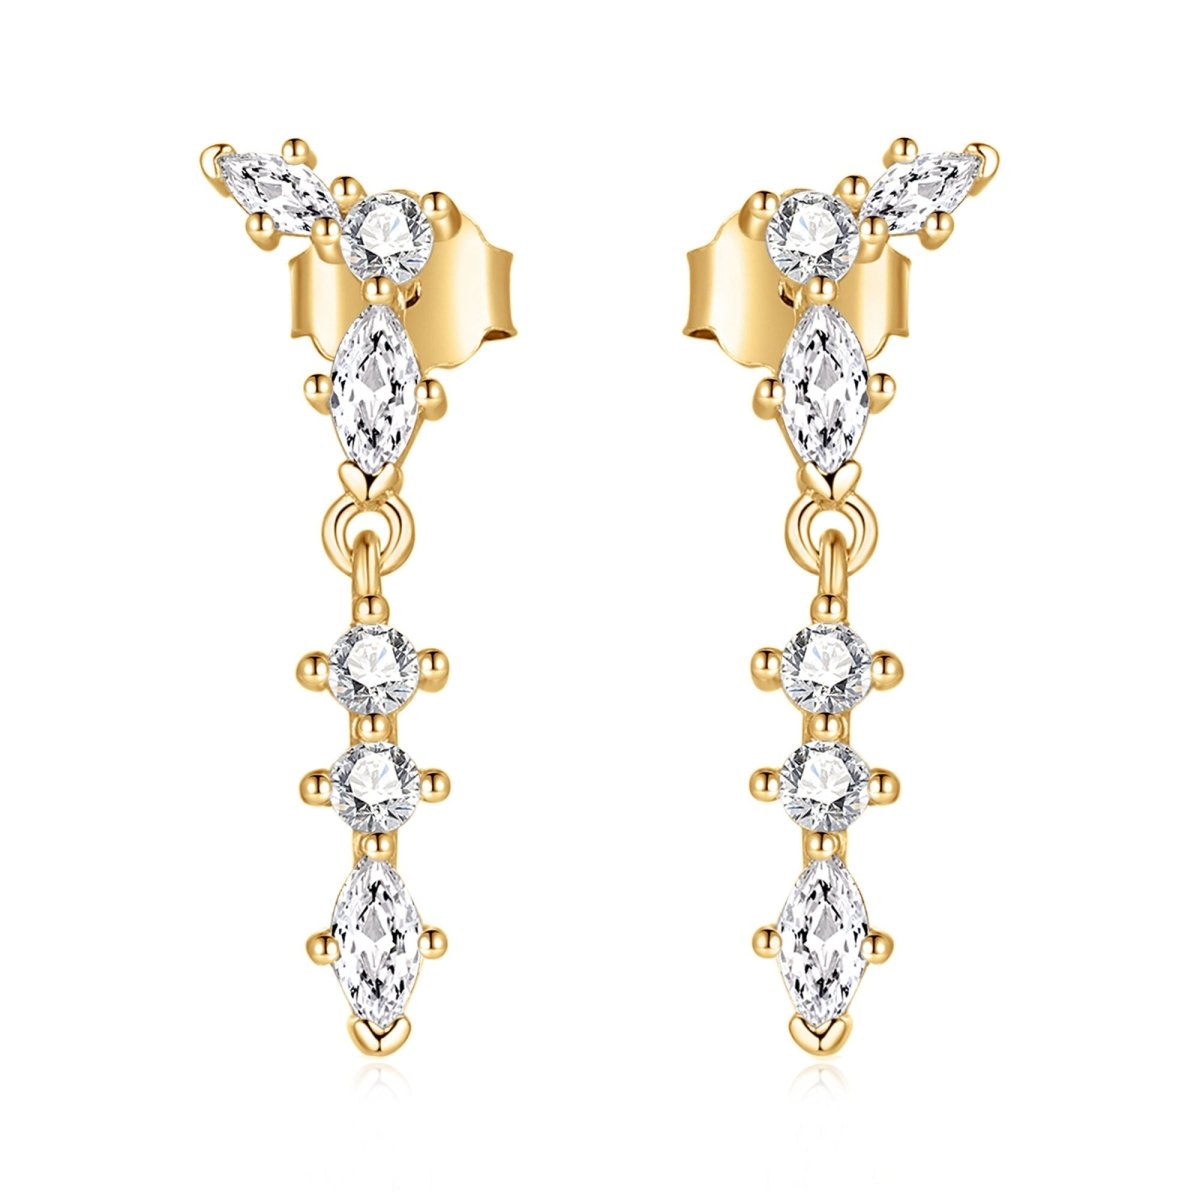 "Flamant" Earrings - Milas Jewels Shop